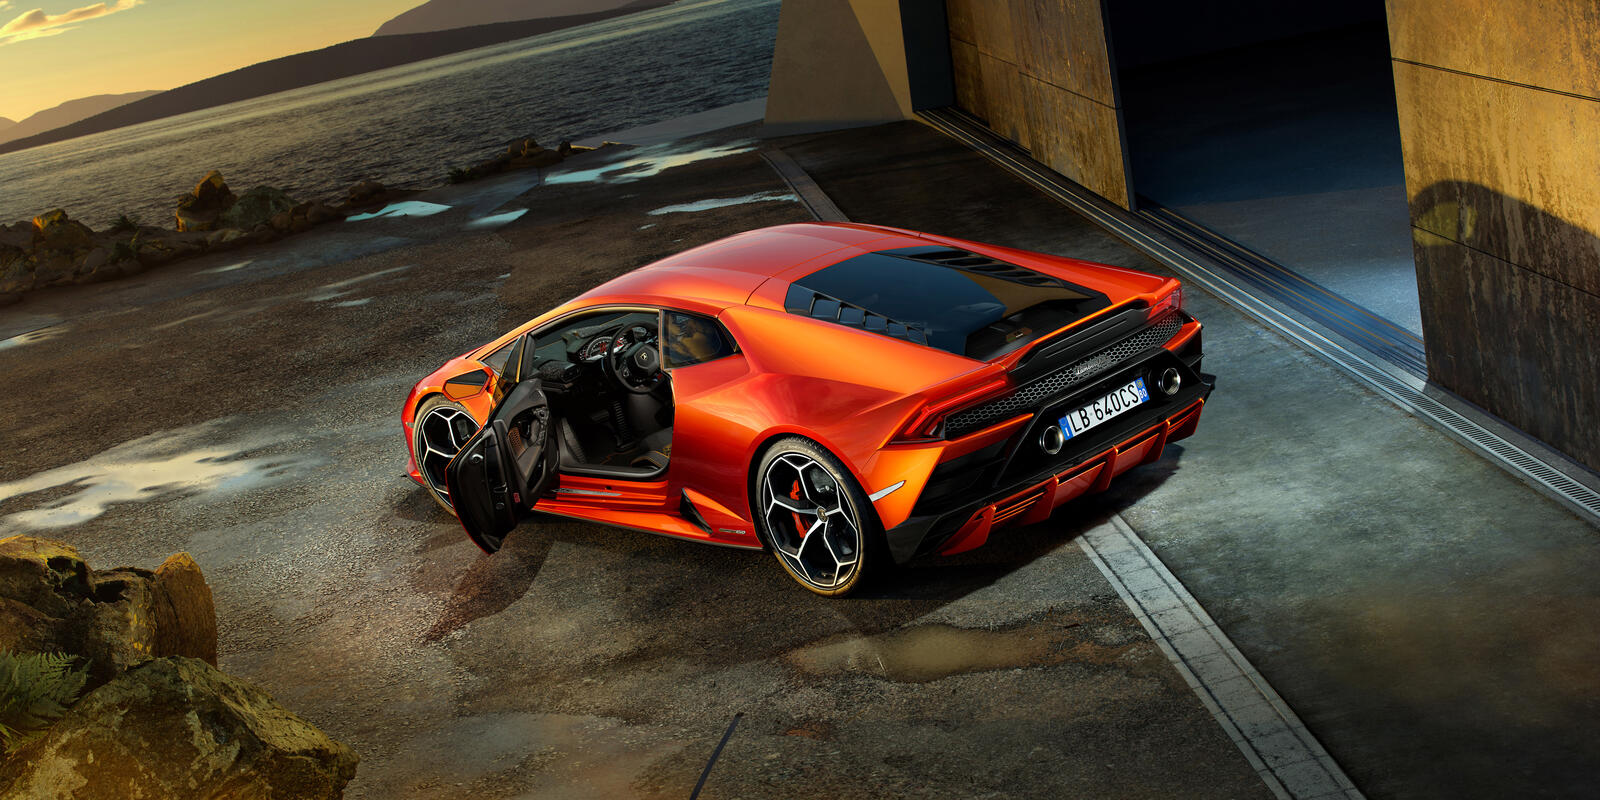 Wallpapers Lamborghini Huracan Evo orange car view from the top on the desktop